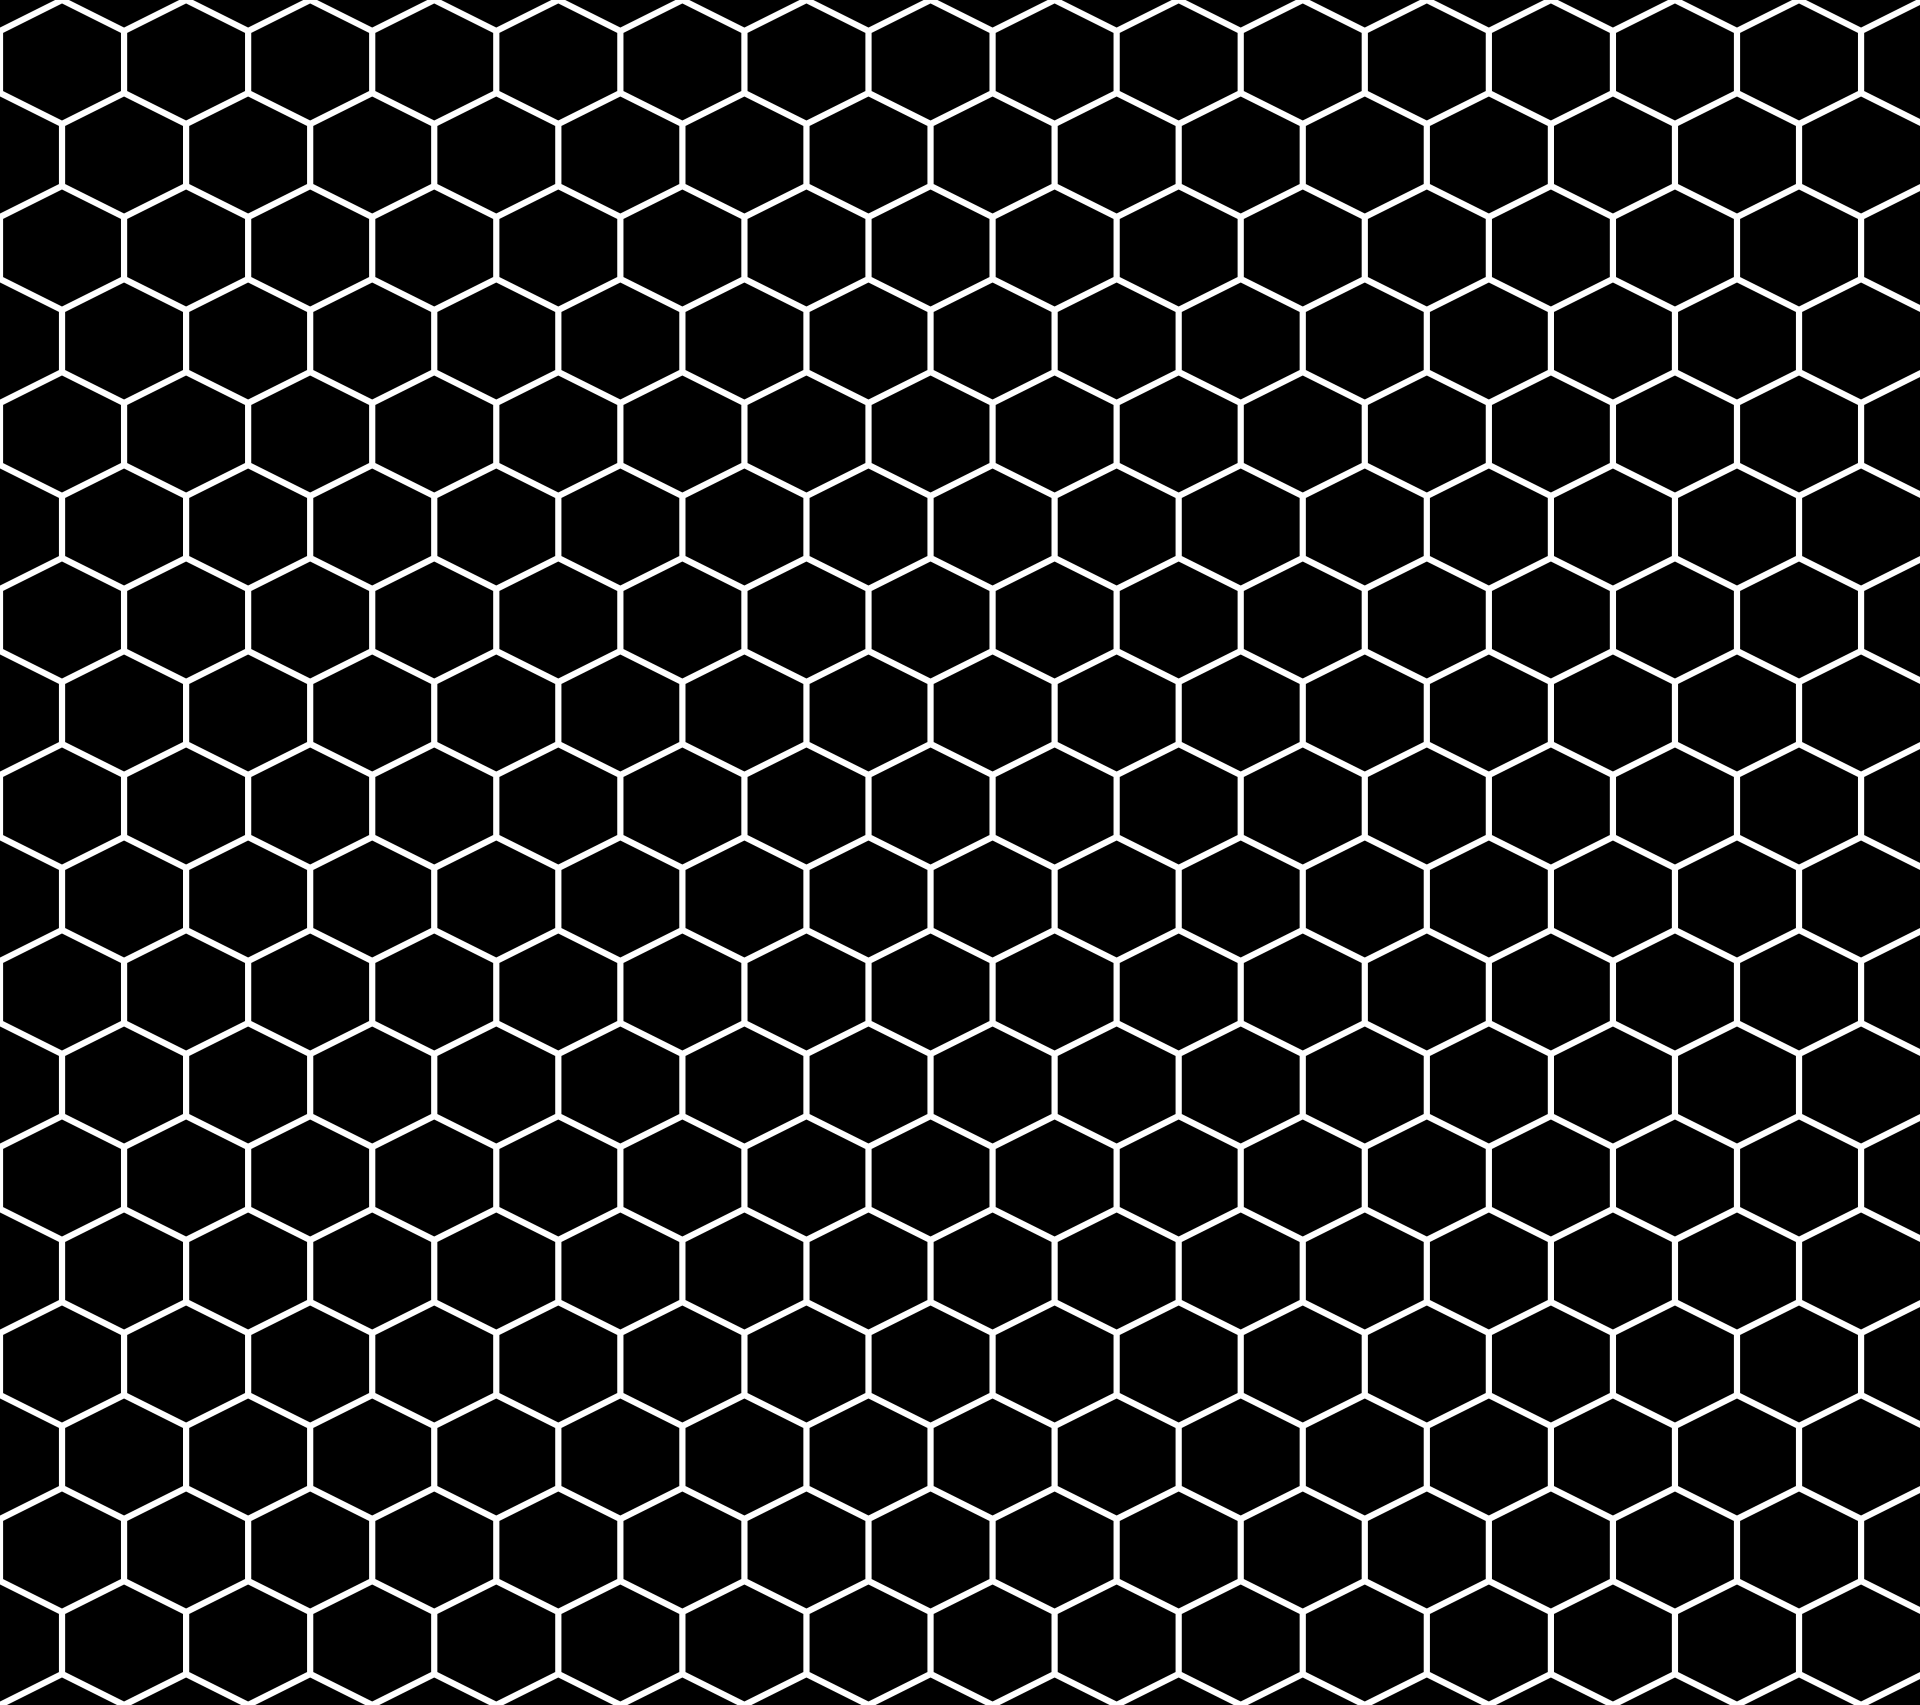 Hexagon alb pe fundal negru